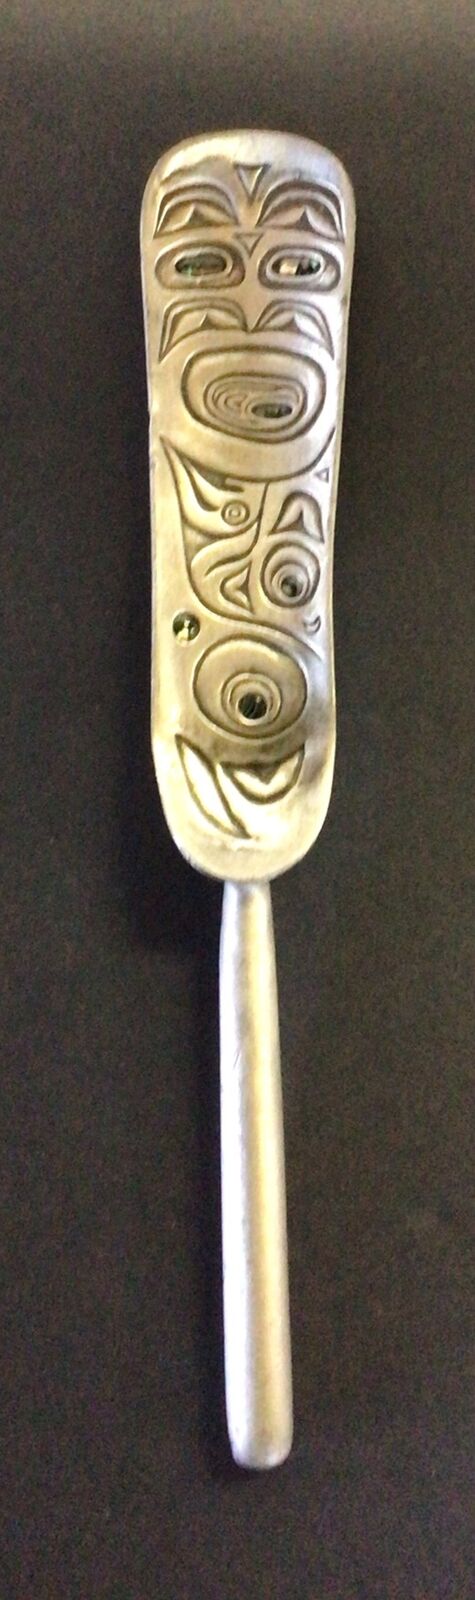 Pewter Raven Soapberry Spoon Designed In Canada By Haida Artist Glen Rabena